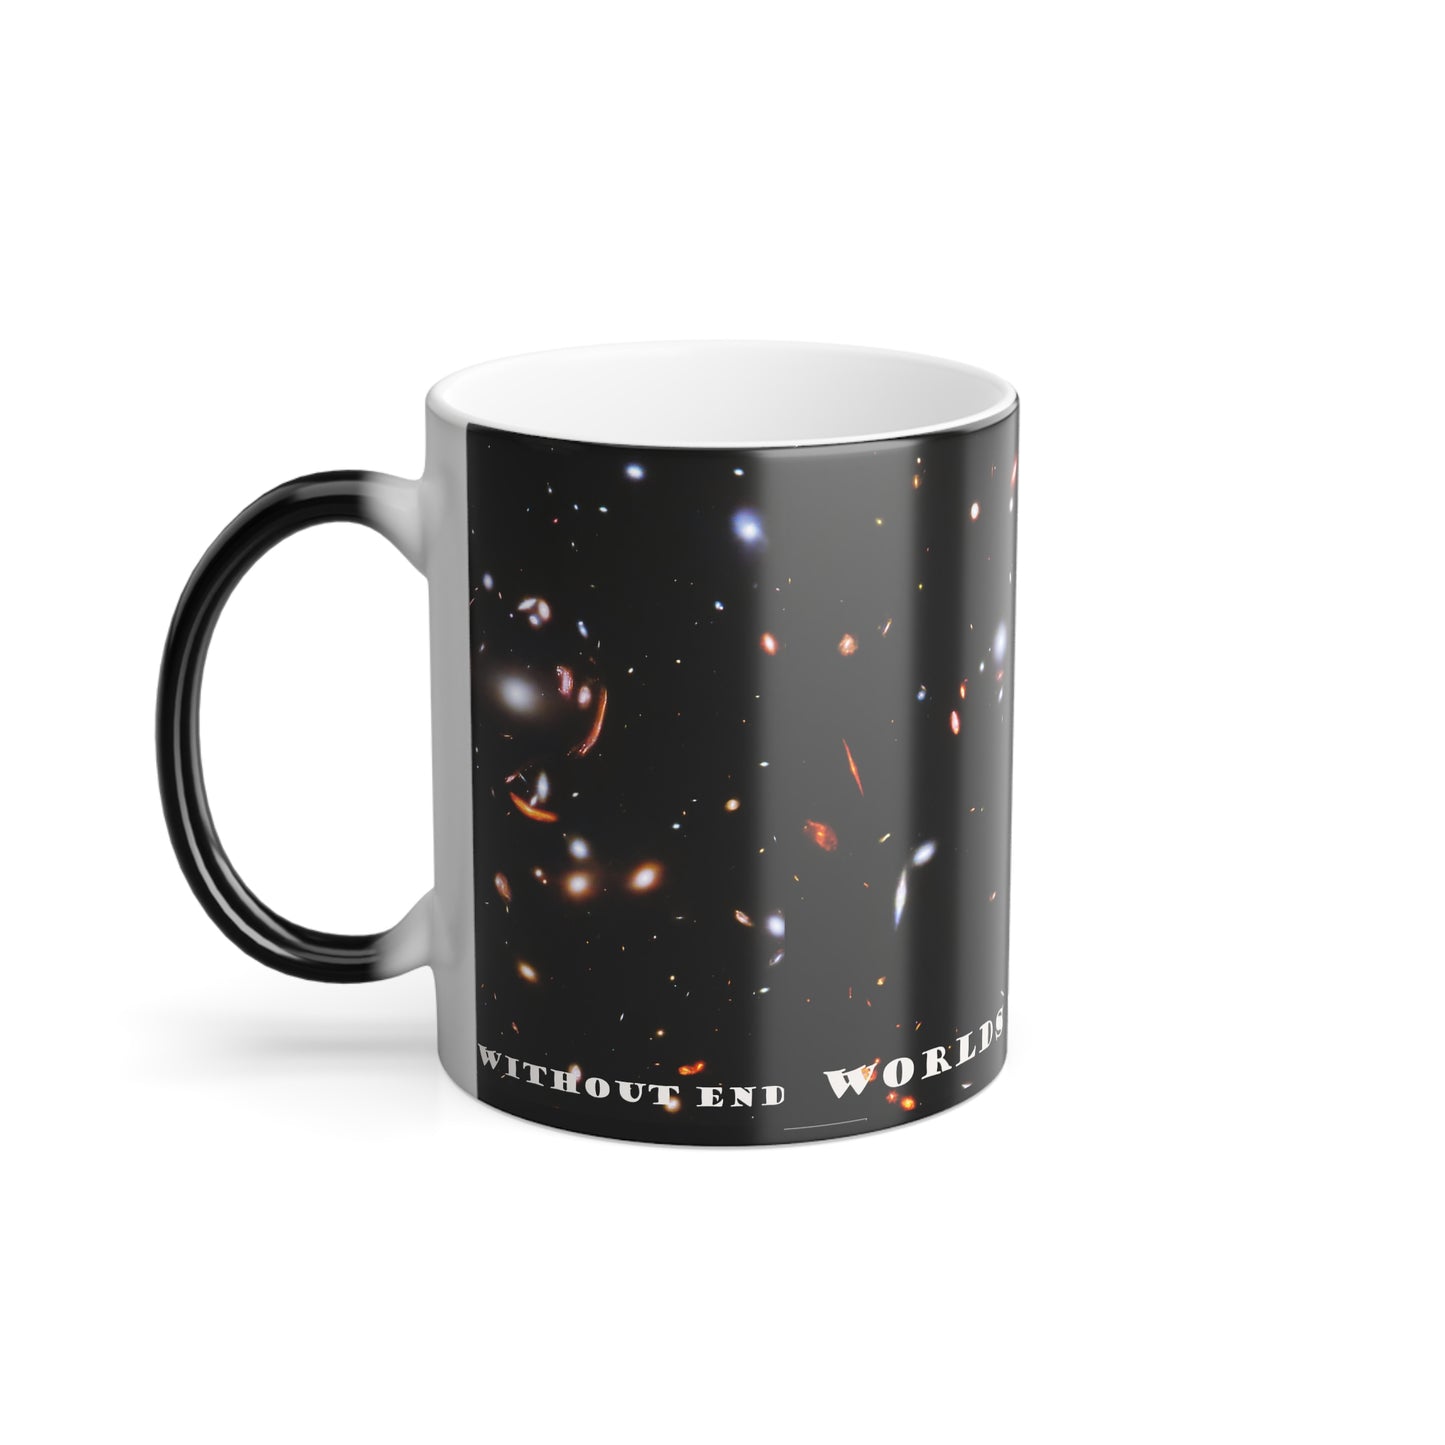 Magical Mug: Cosmos 1 Reveals the Universe with Heat 11oz